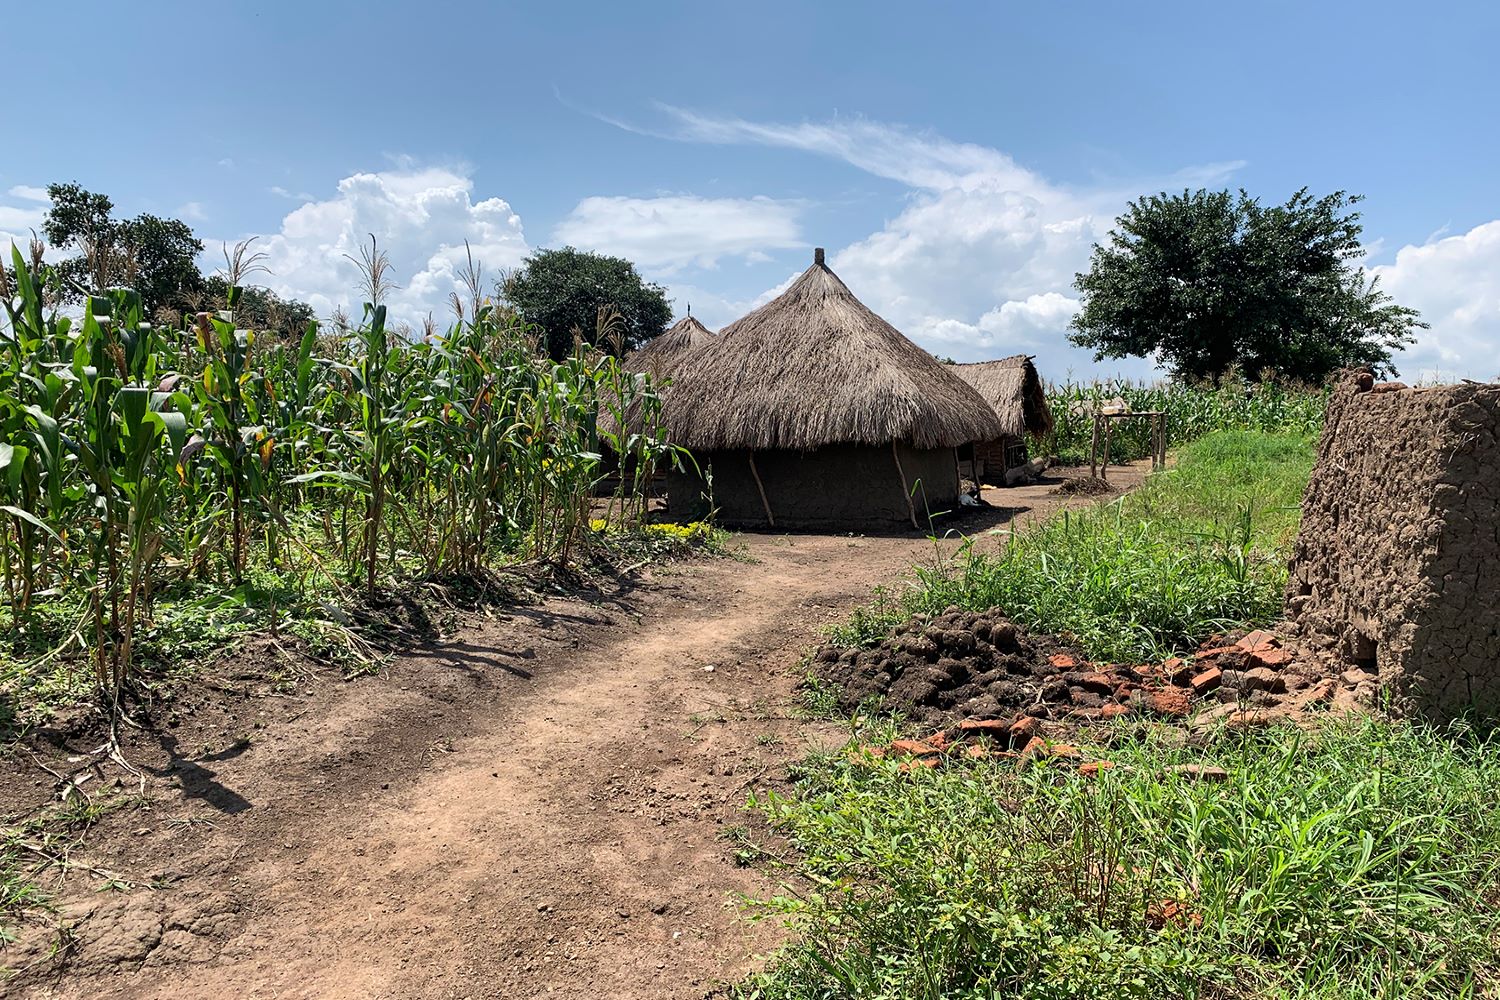 Dirt road leading to a rural village in Uganda